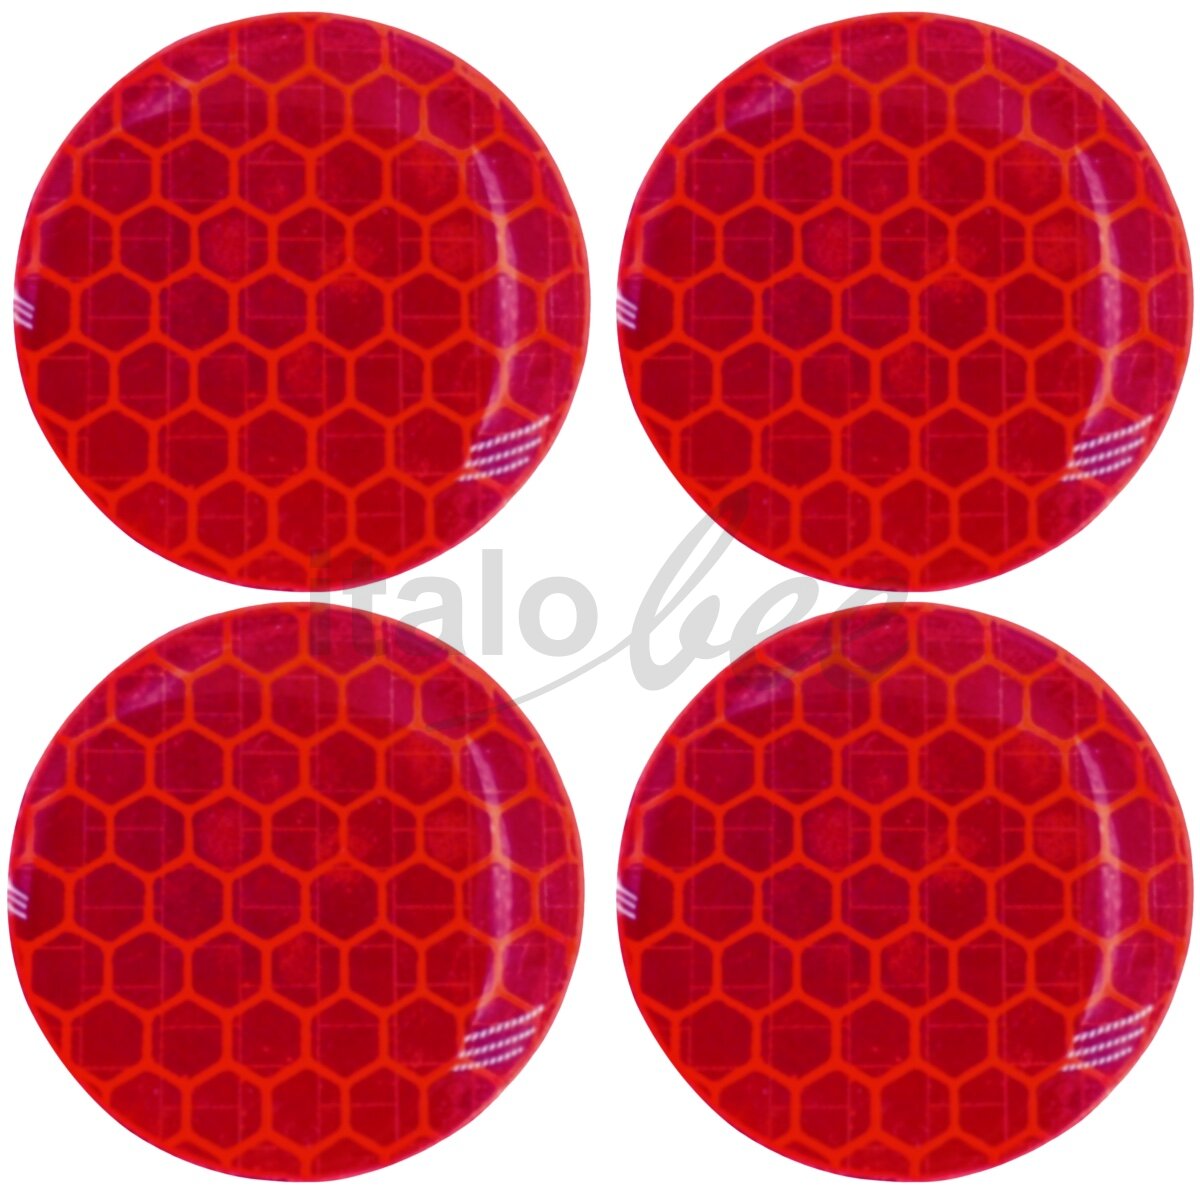 Reflektoren-Set 4-teilig, selbstklebend, Farbe: rot - italobee Shop, 8,90 €